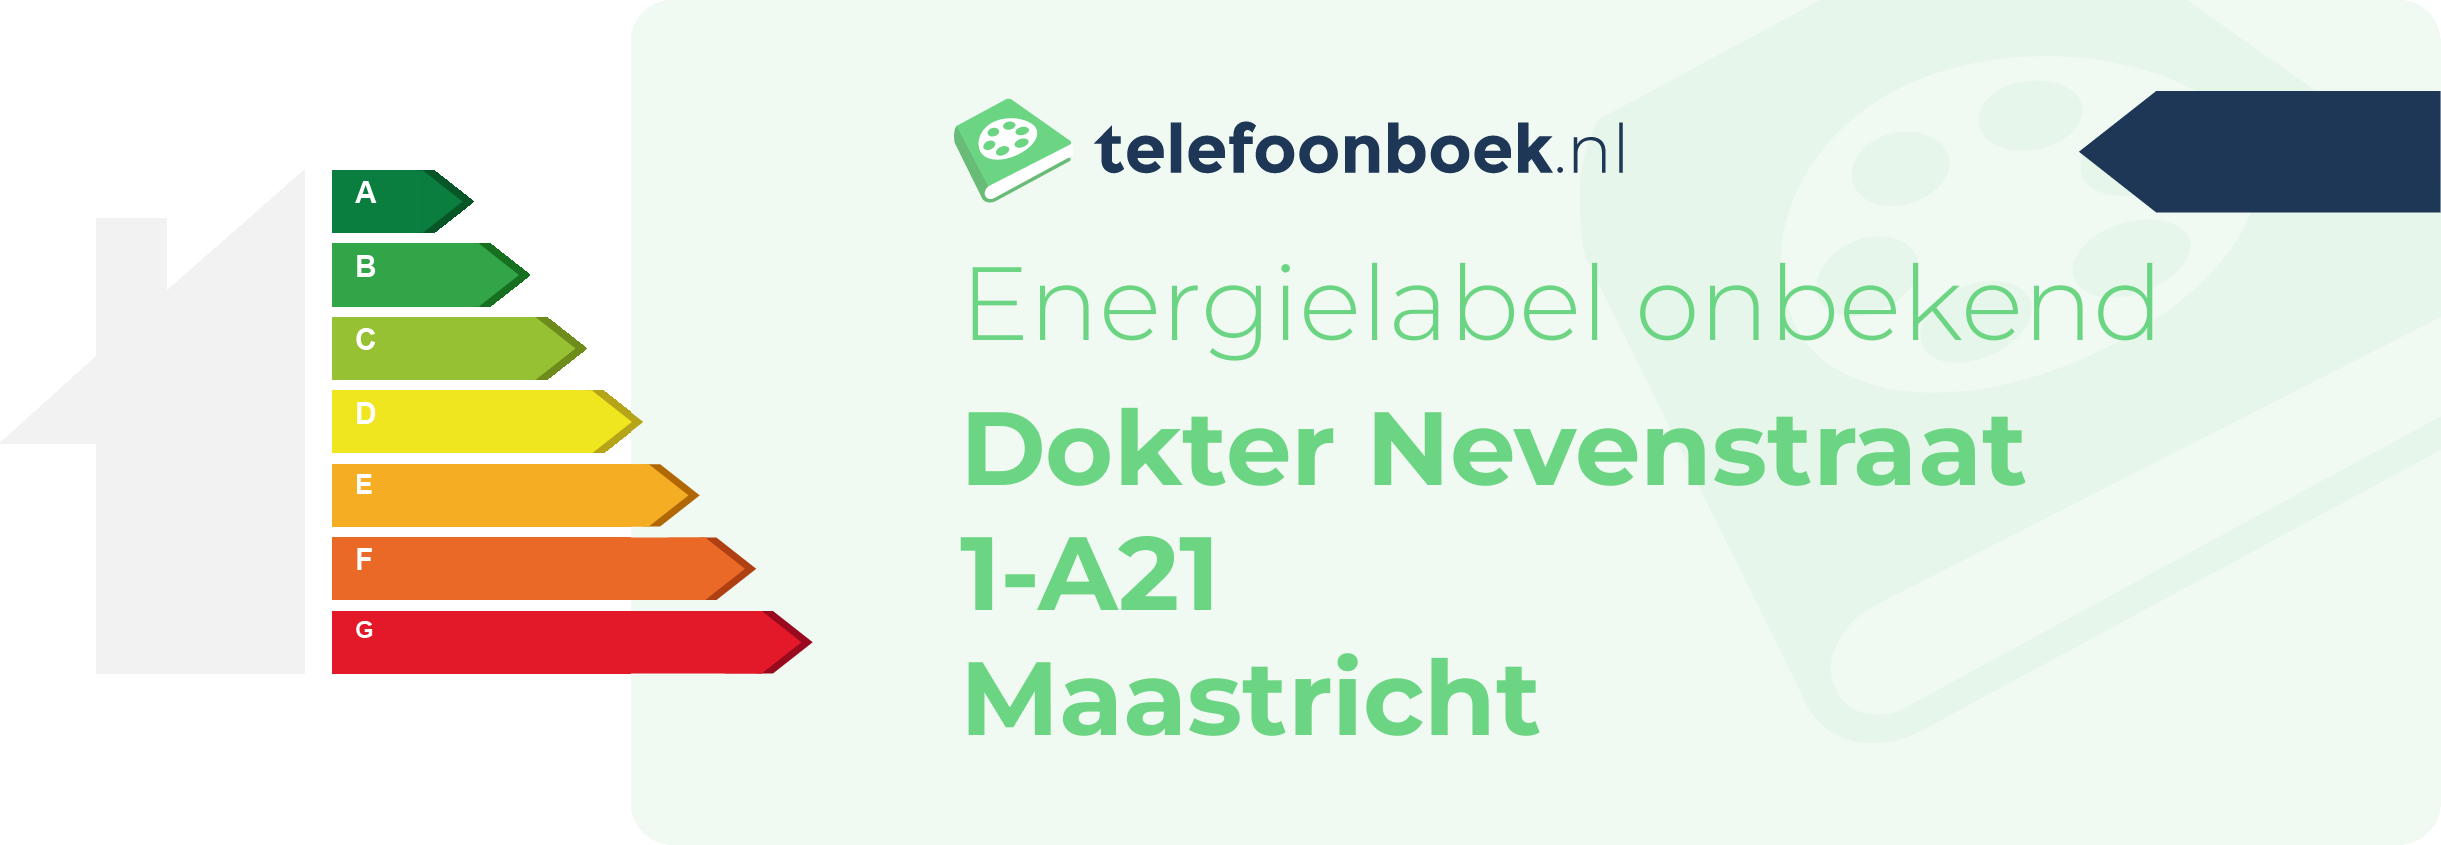 Energielabel Dokter Nevenstraat 1-A21 Maastricht